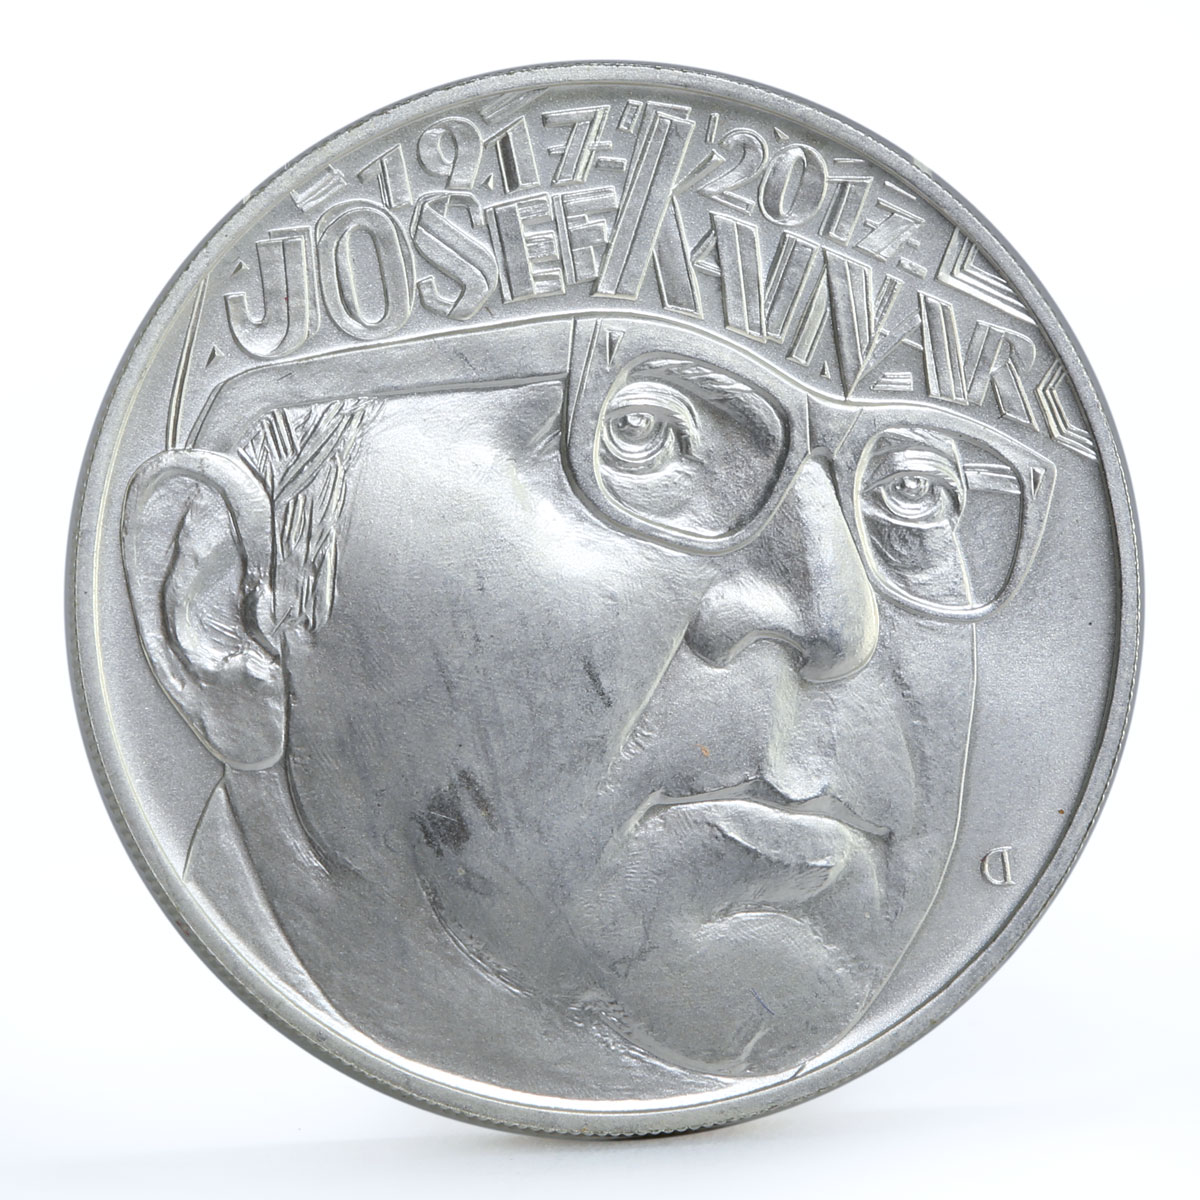 Czech Republic 200 korun Musician and Poet Josef Kainar silver coin 2017